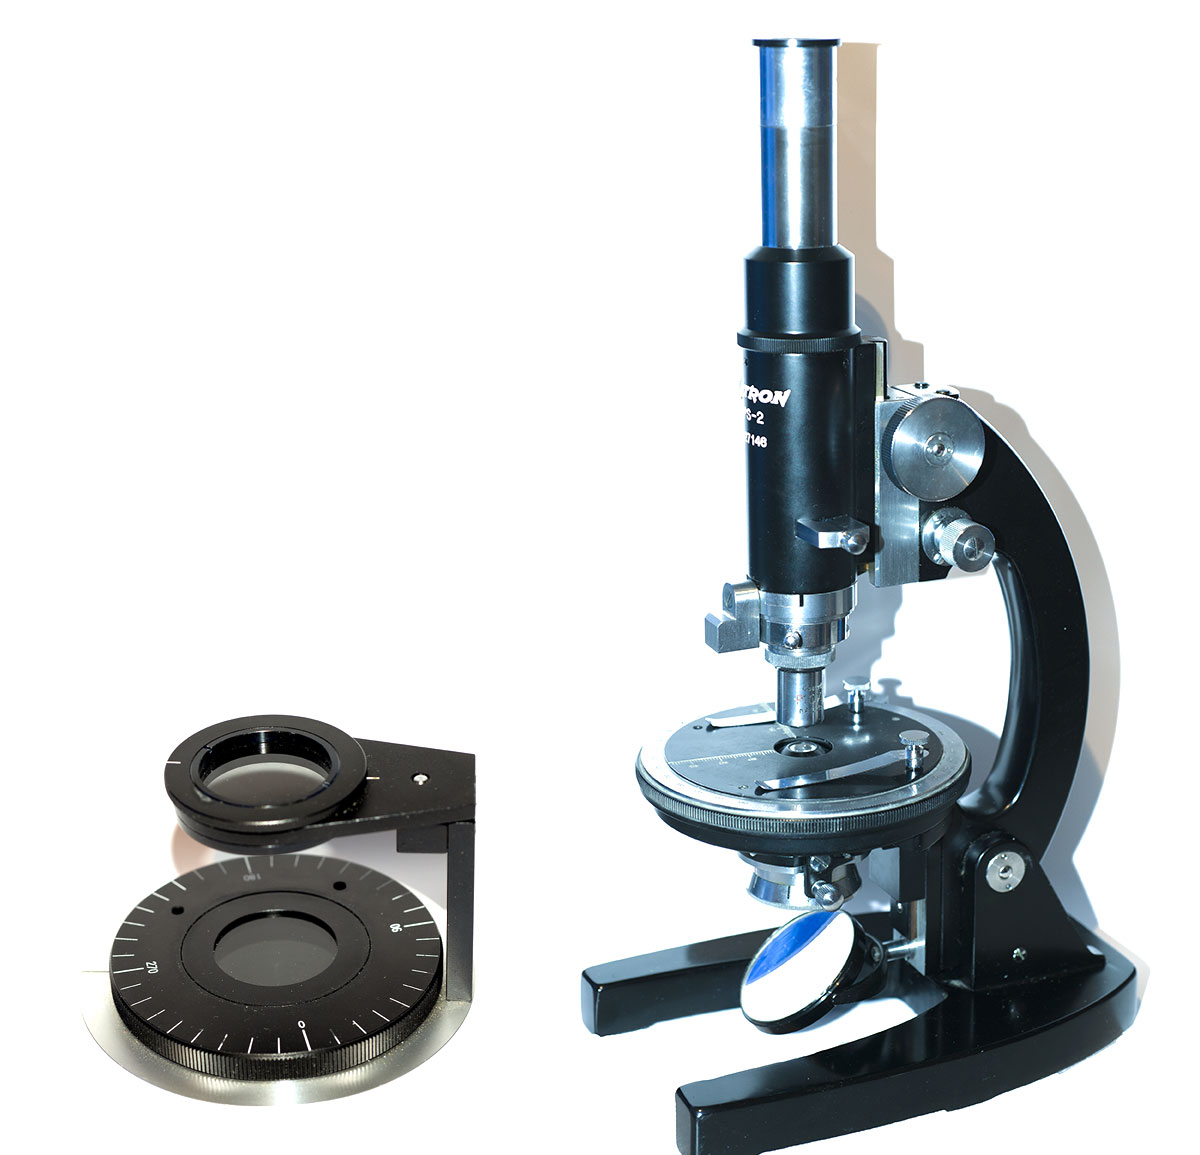 Motic SMZ161 stereomicroscope polarizing Kit and Unitroon Polarizing microscope Robert Berdan ©